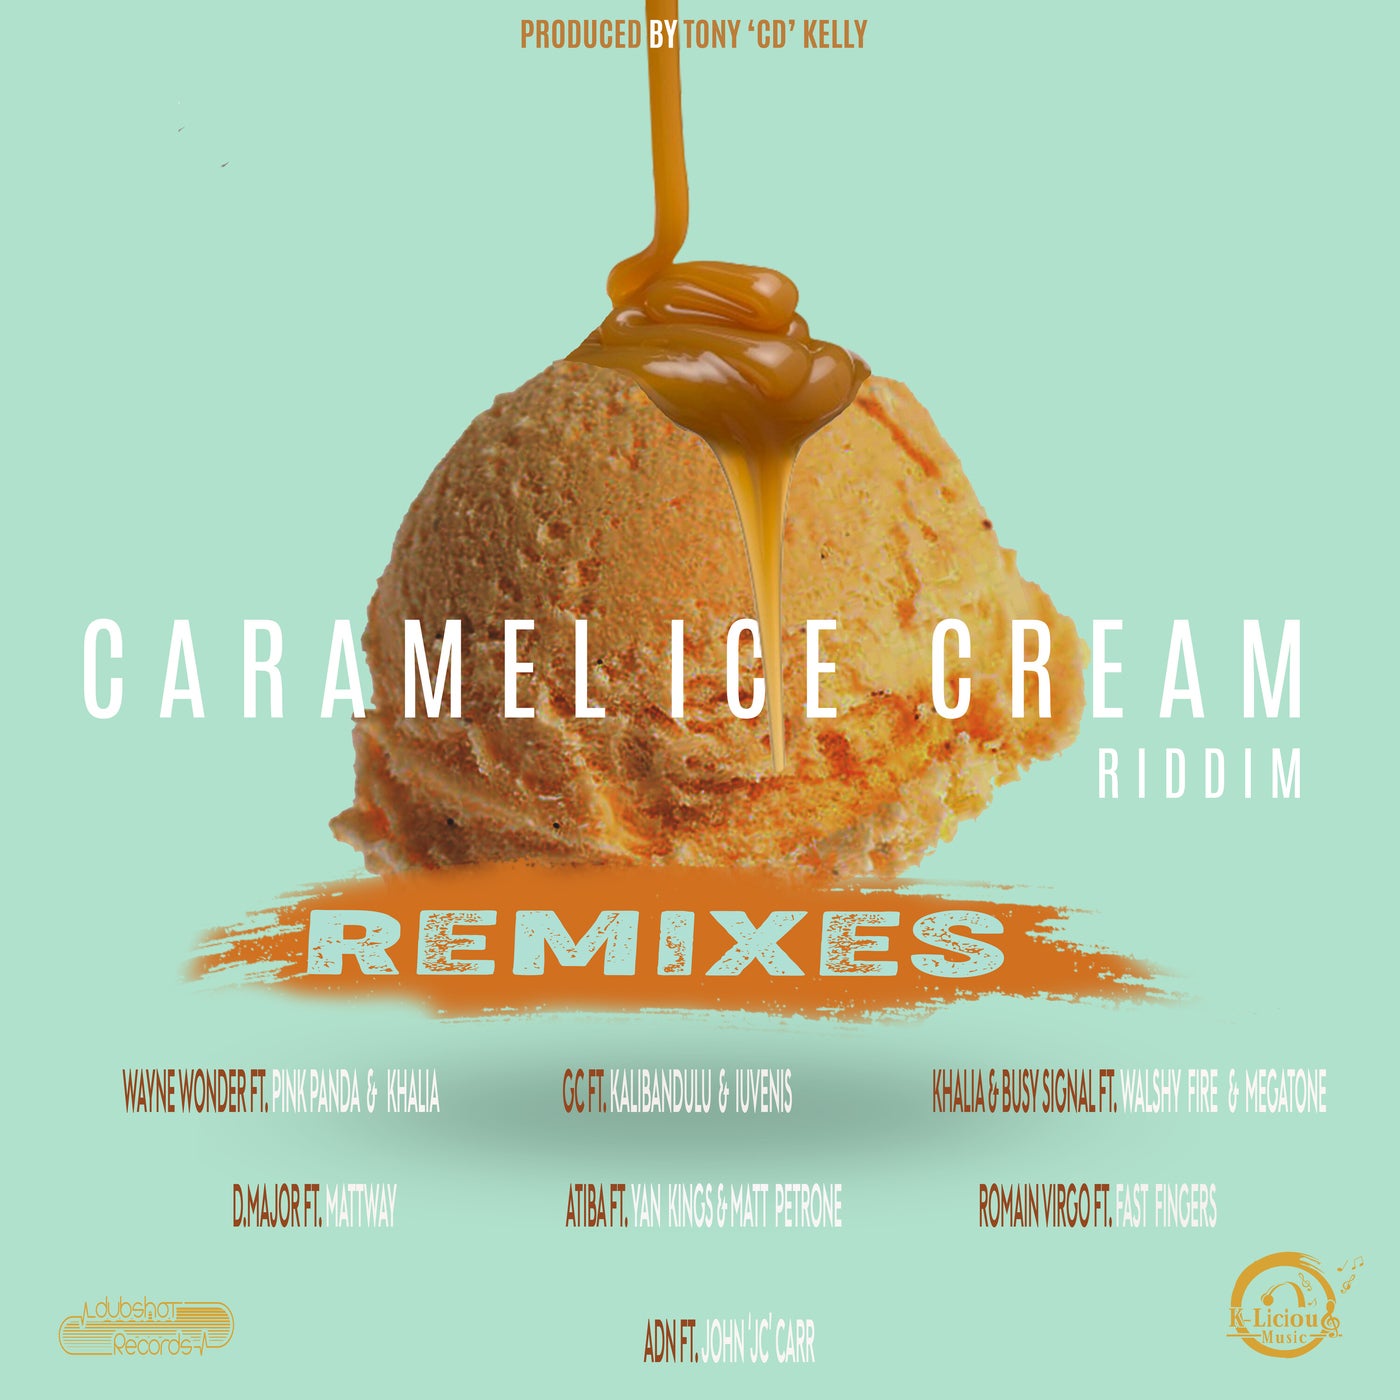 Caramel Ice Cream Riddim